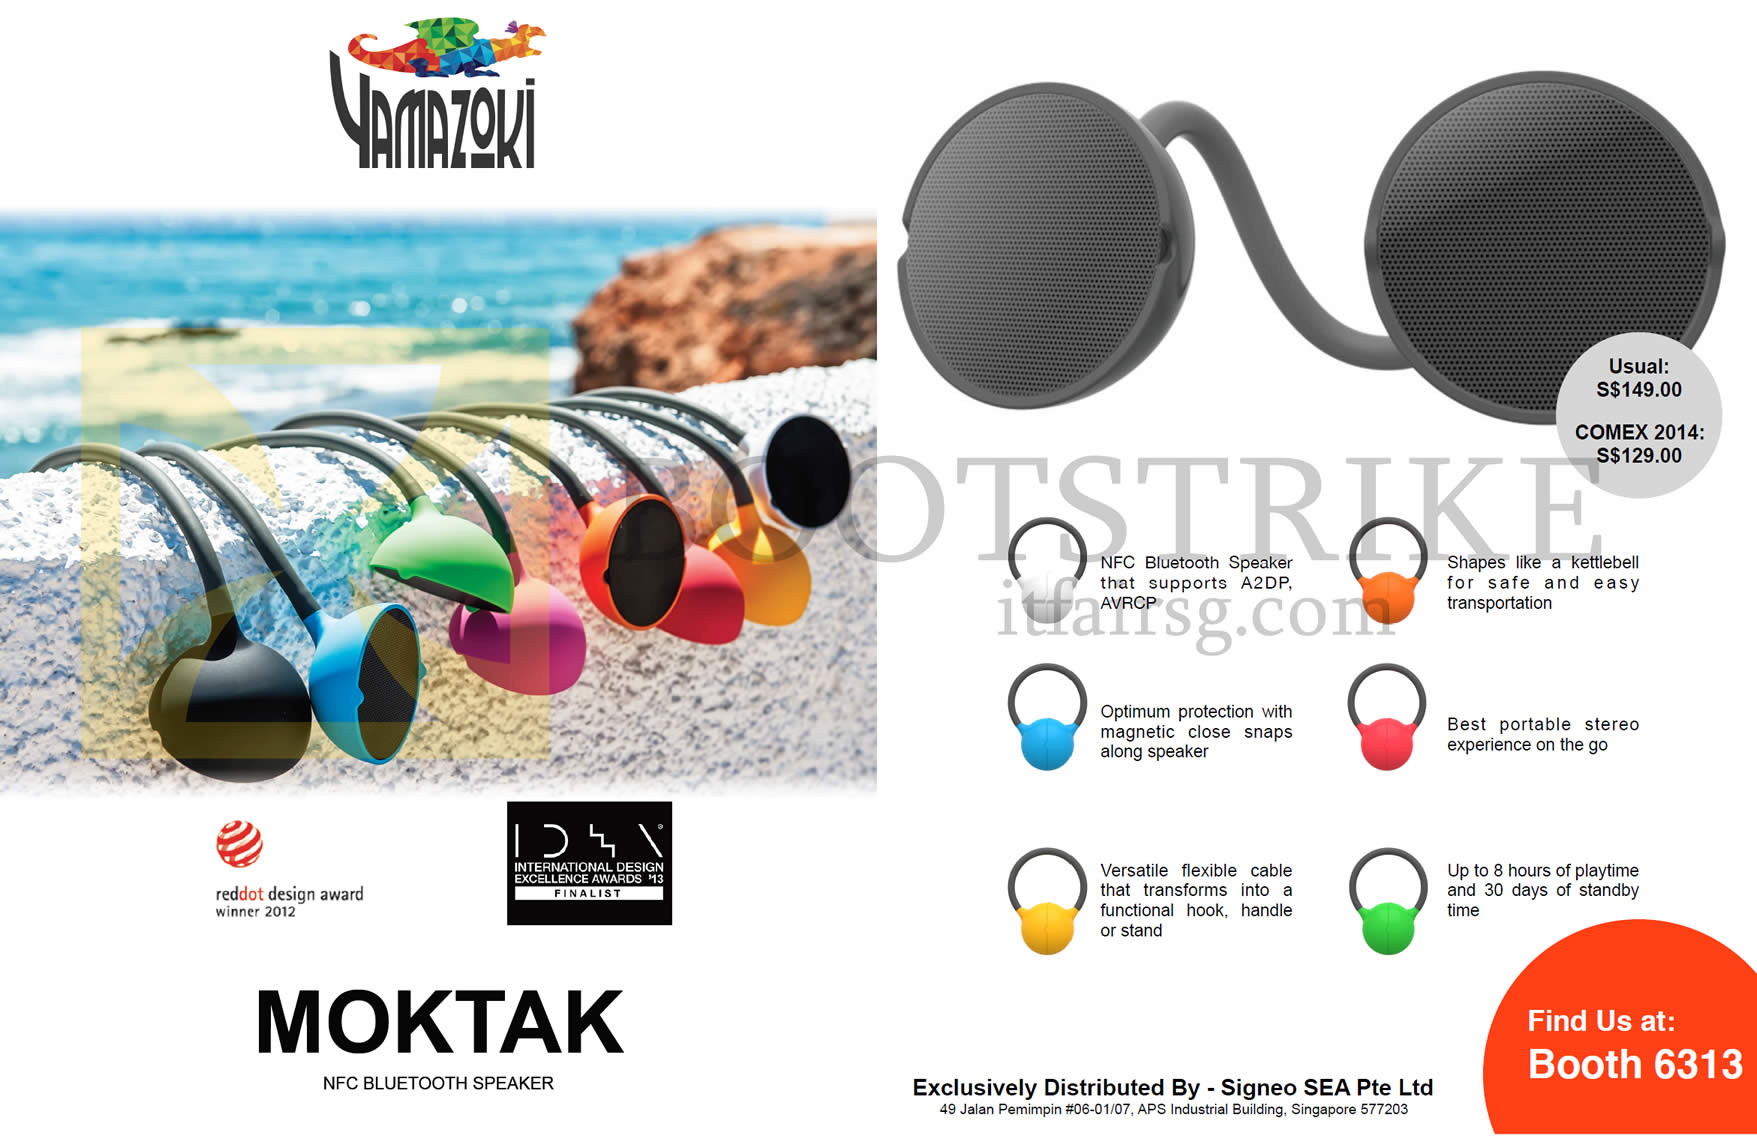 COMEX 2014 price list image brochure of Sprint-Cass Yamazoki Moktak NFC Bluetooth Speaker